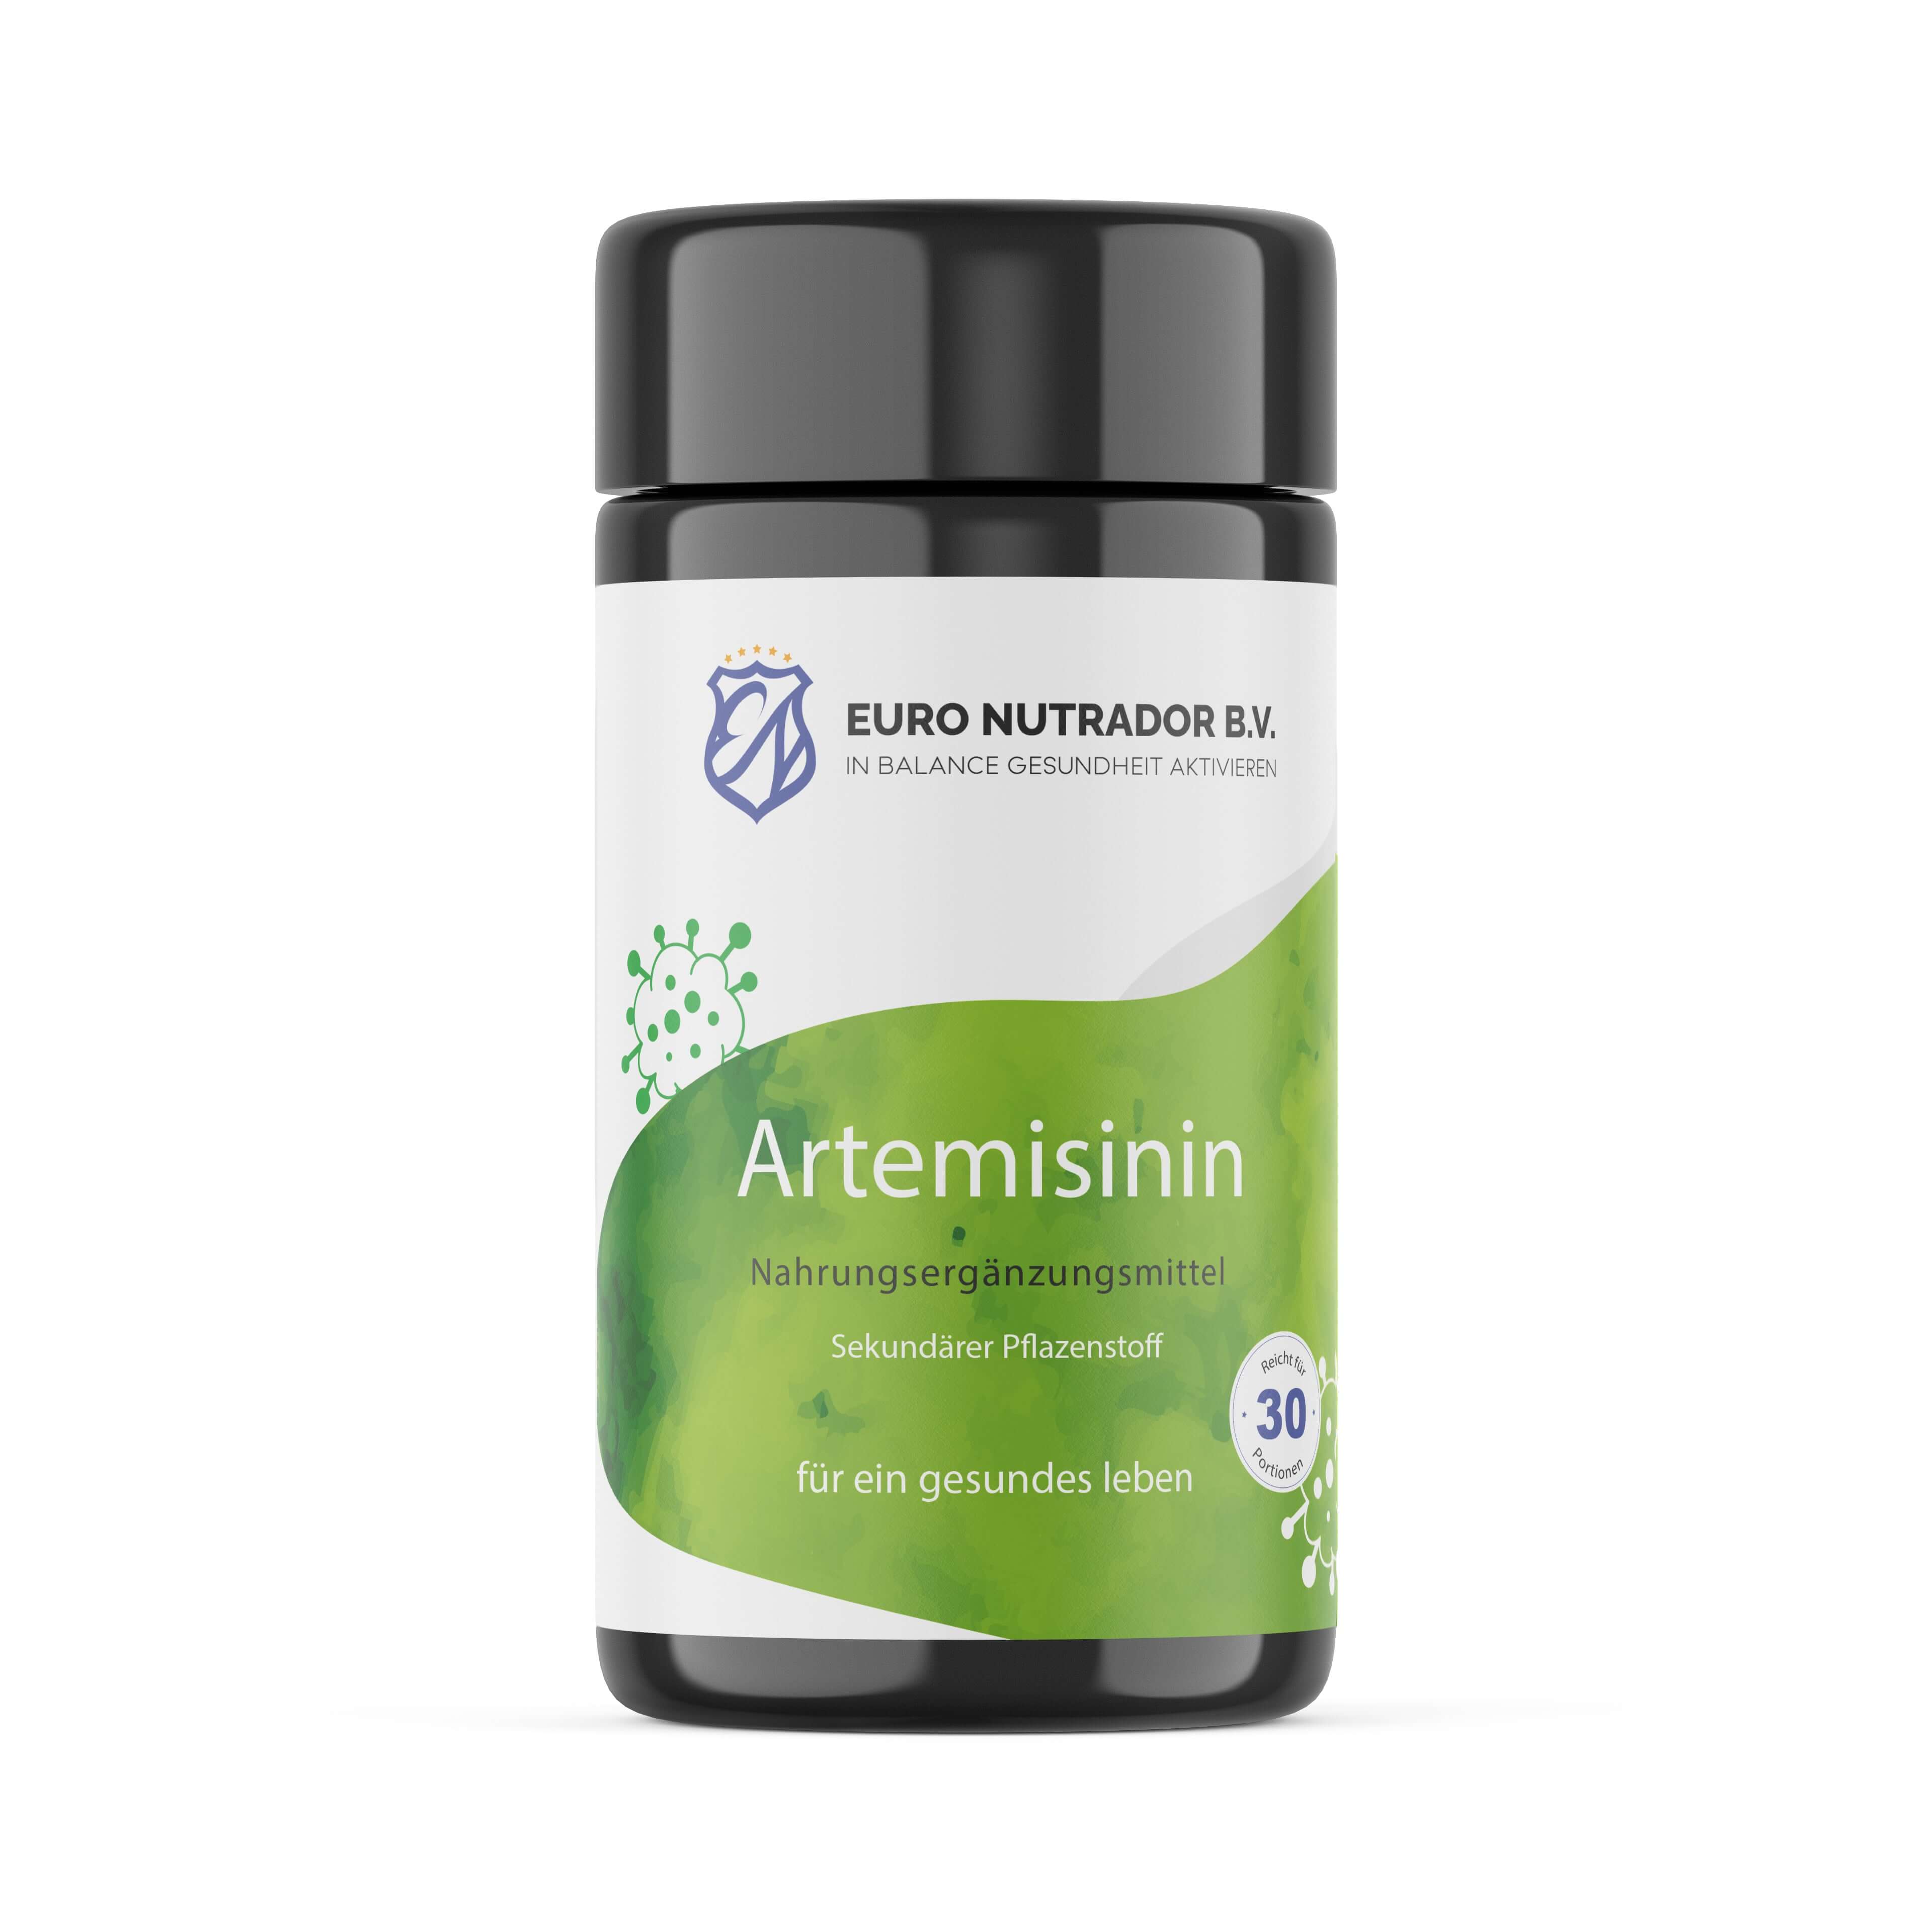 Artemisinin - Nahrungsergänzungsmittel bei Krebs